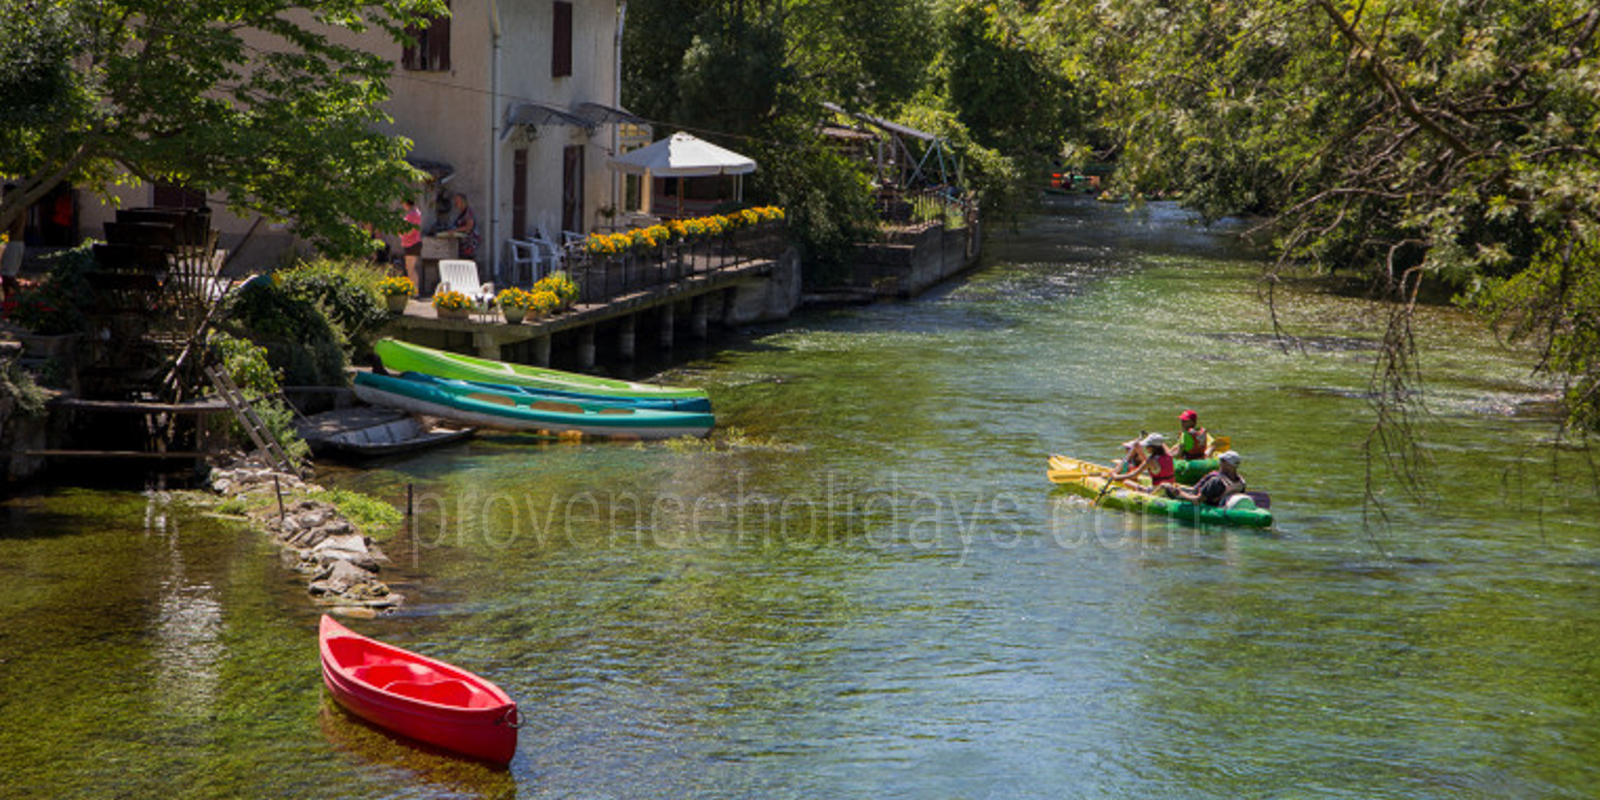 Club Canoe Kayak Islois - 0